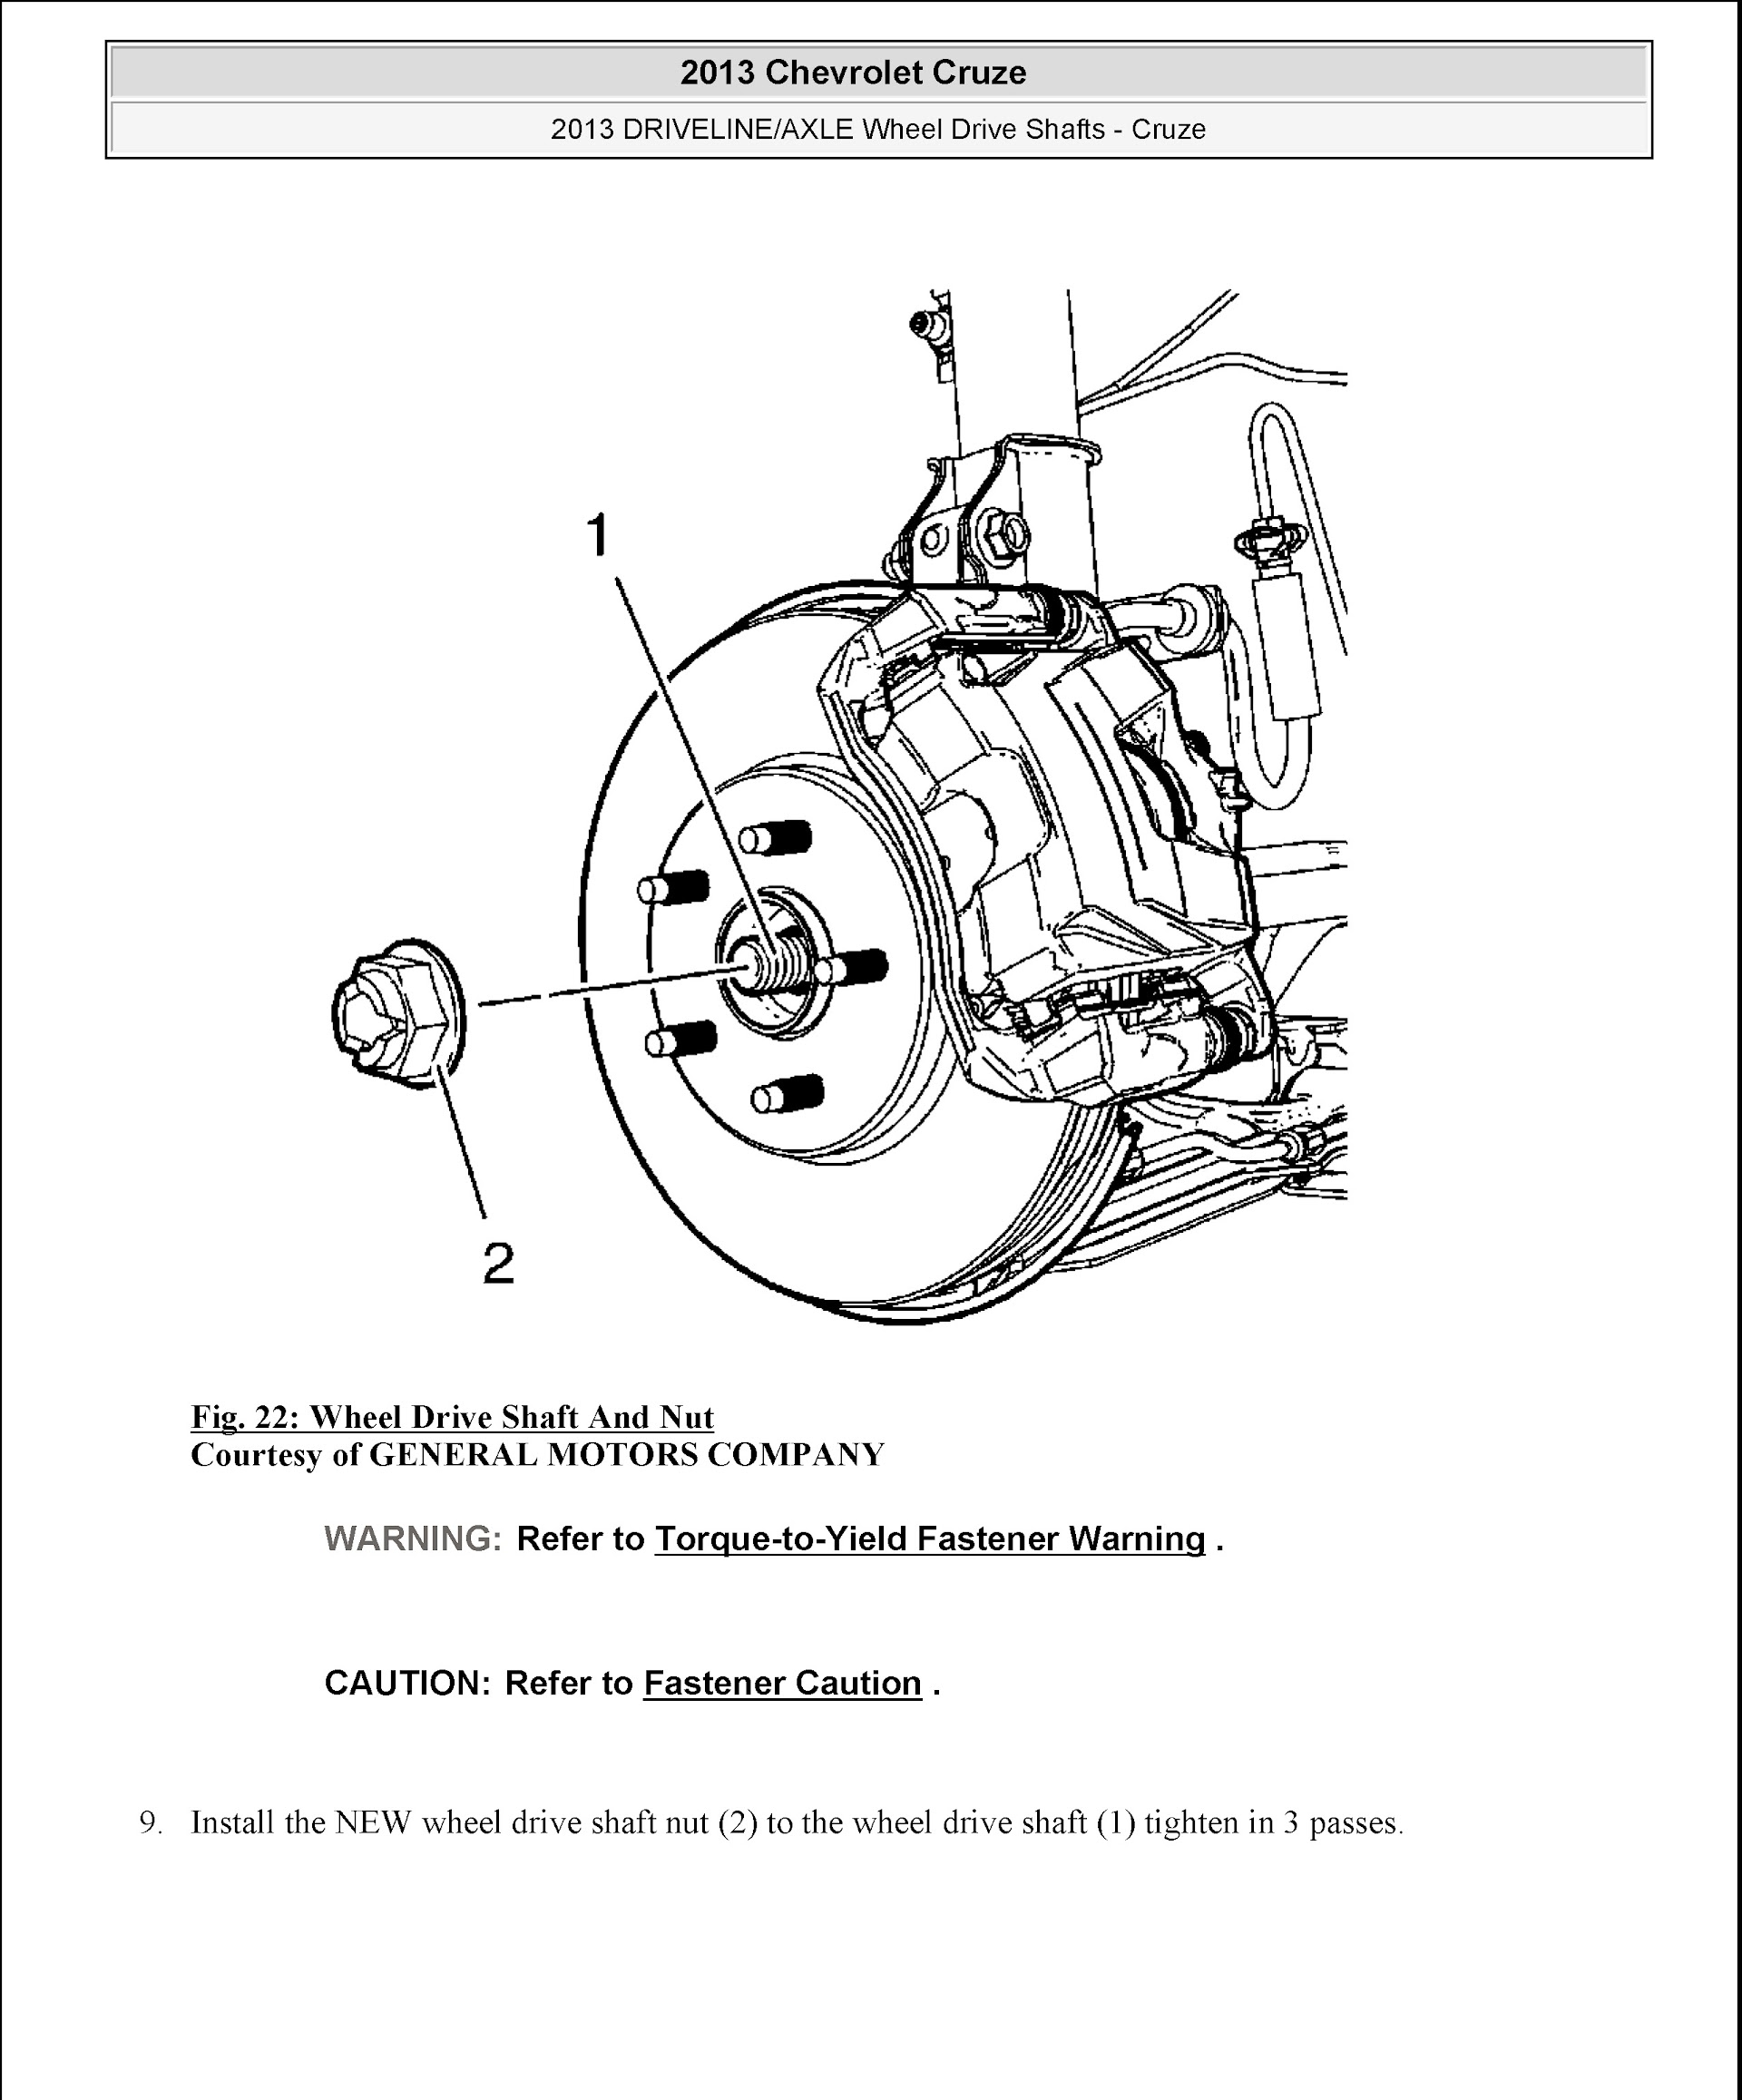 CONTENTS: 2010-2016 Chevrolet Cruze Repair Manual, driveline axle